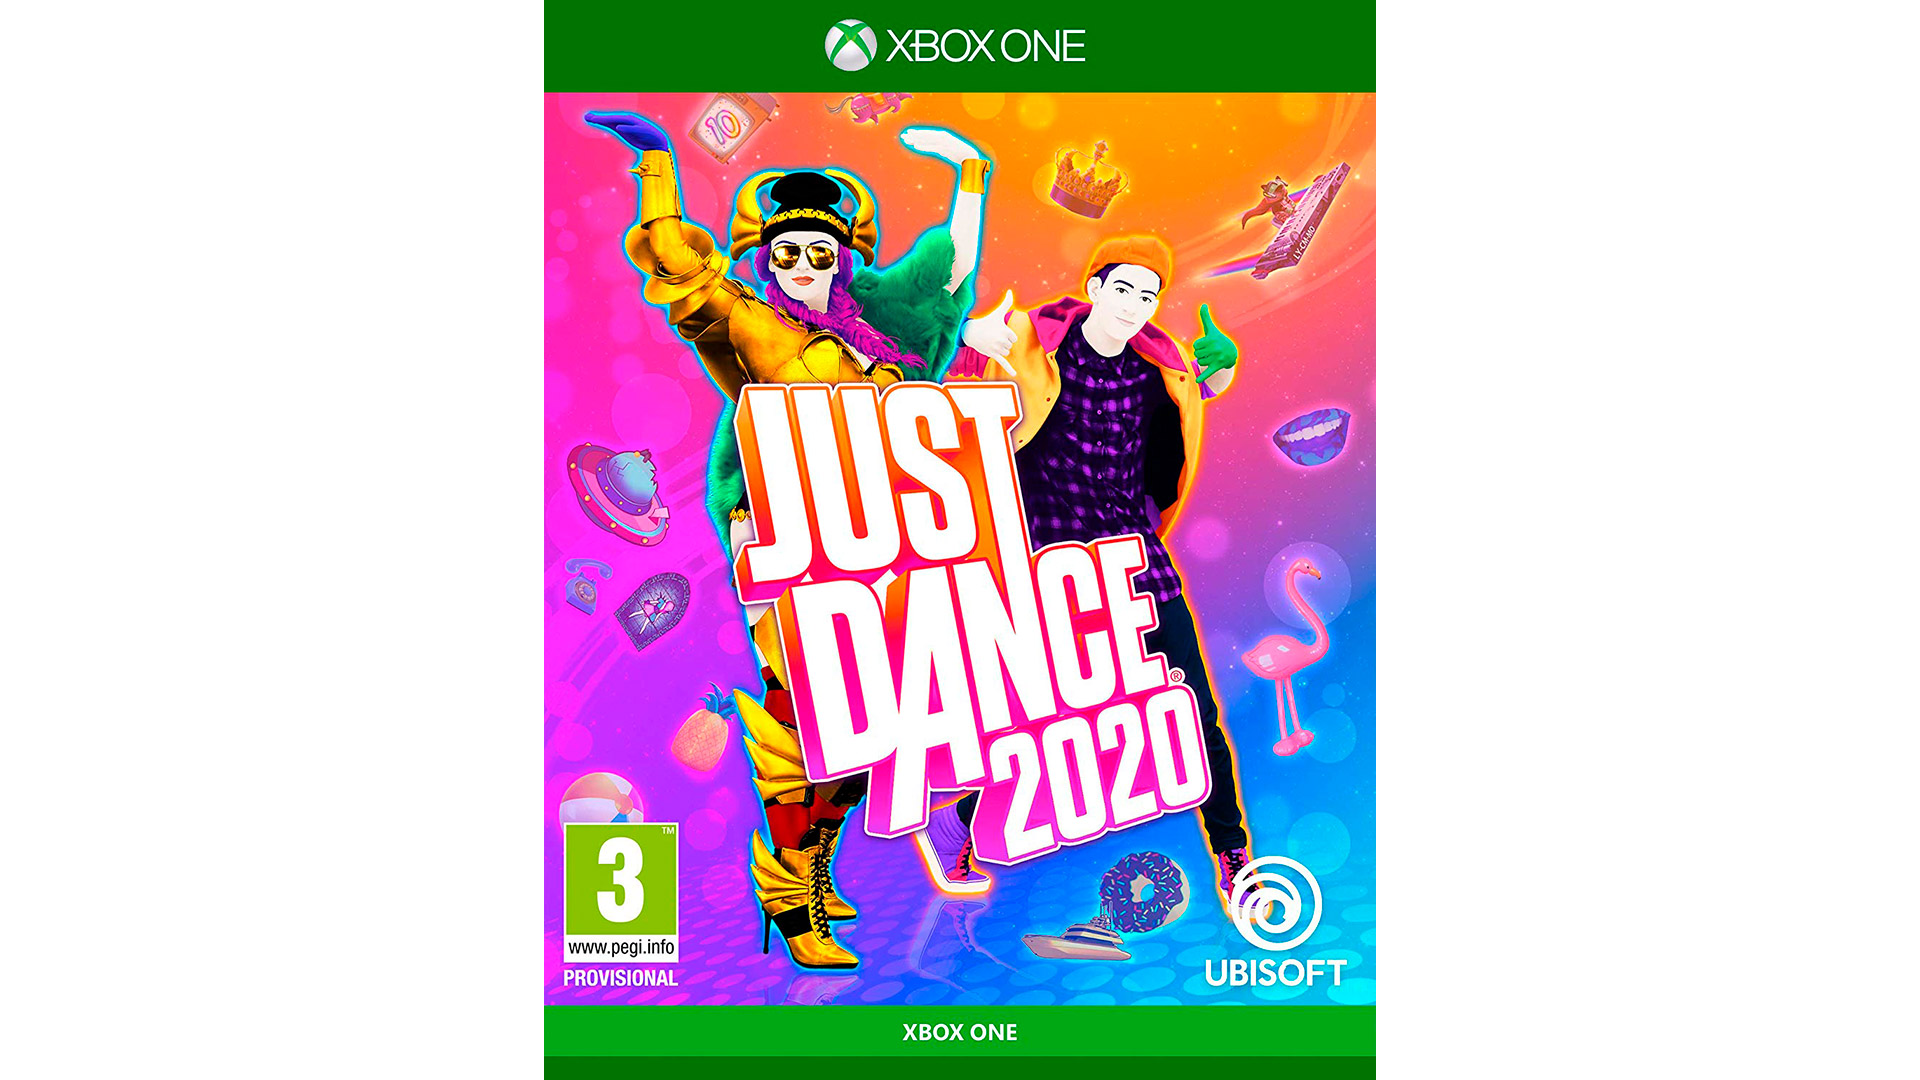 Just Dance 2020 игра для Xbox One [XOJD20]